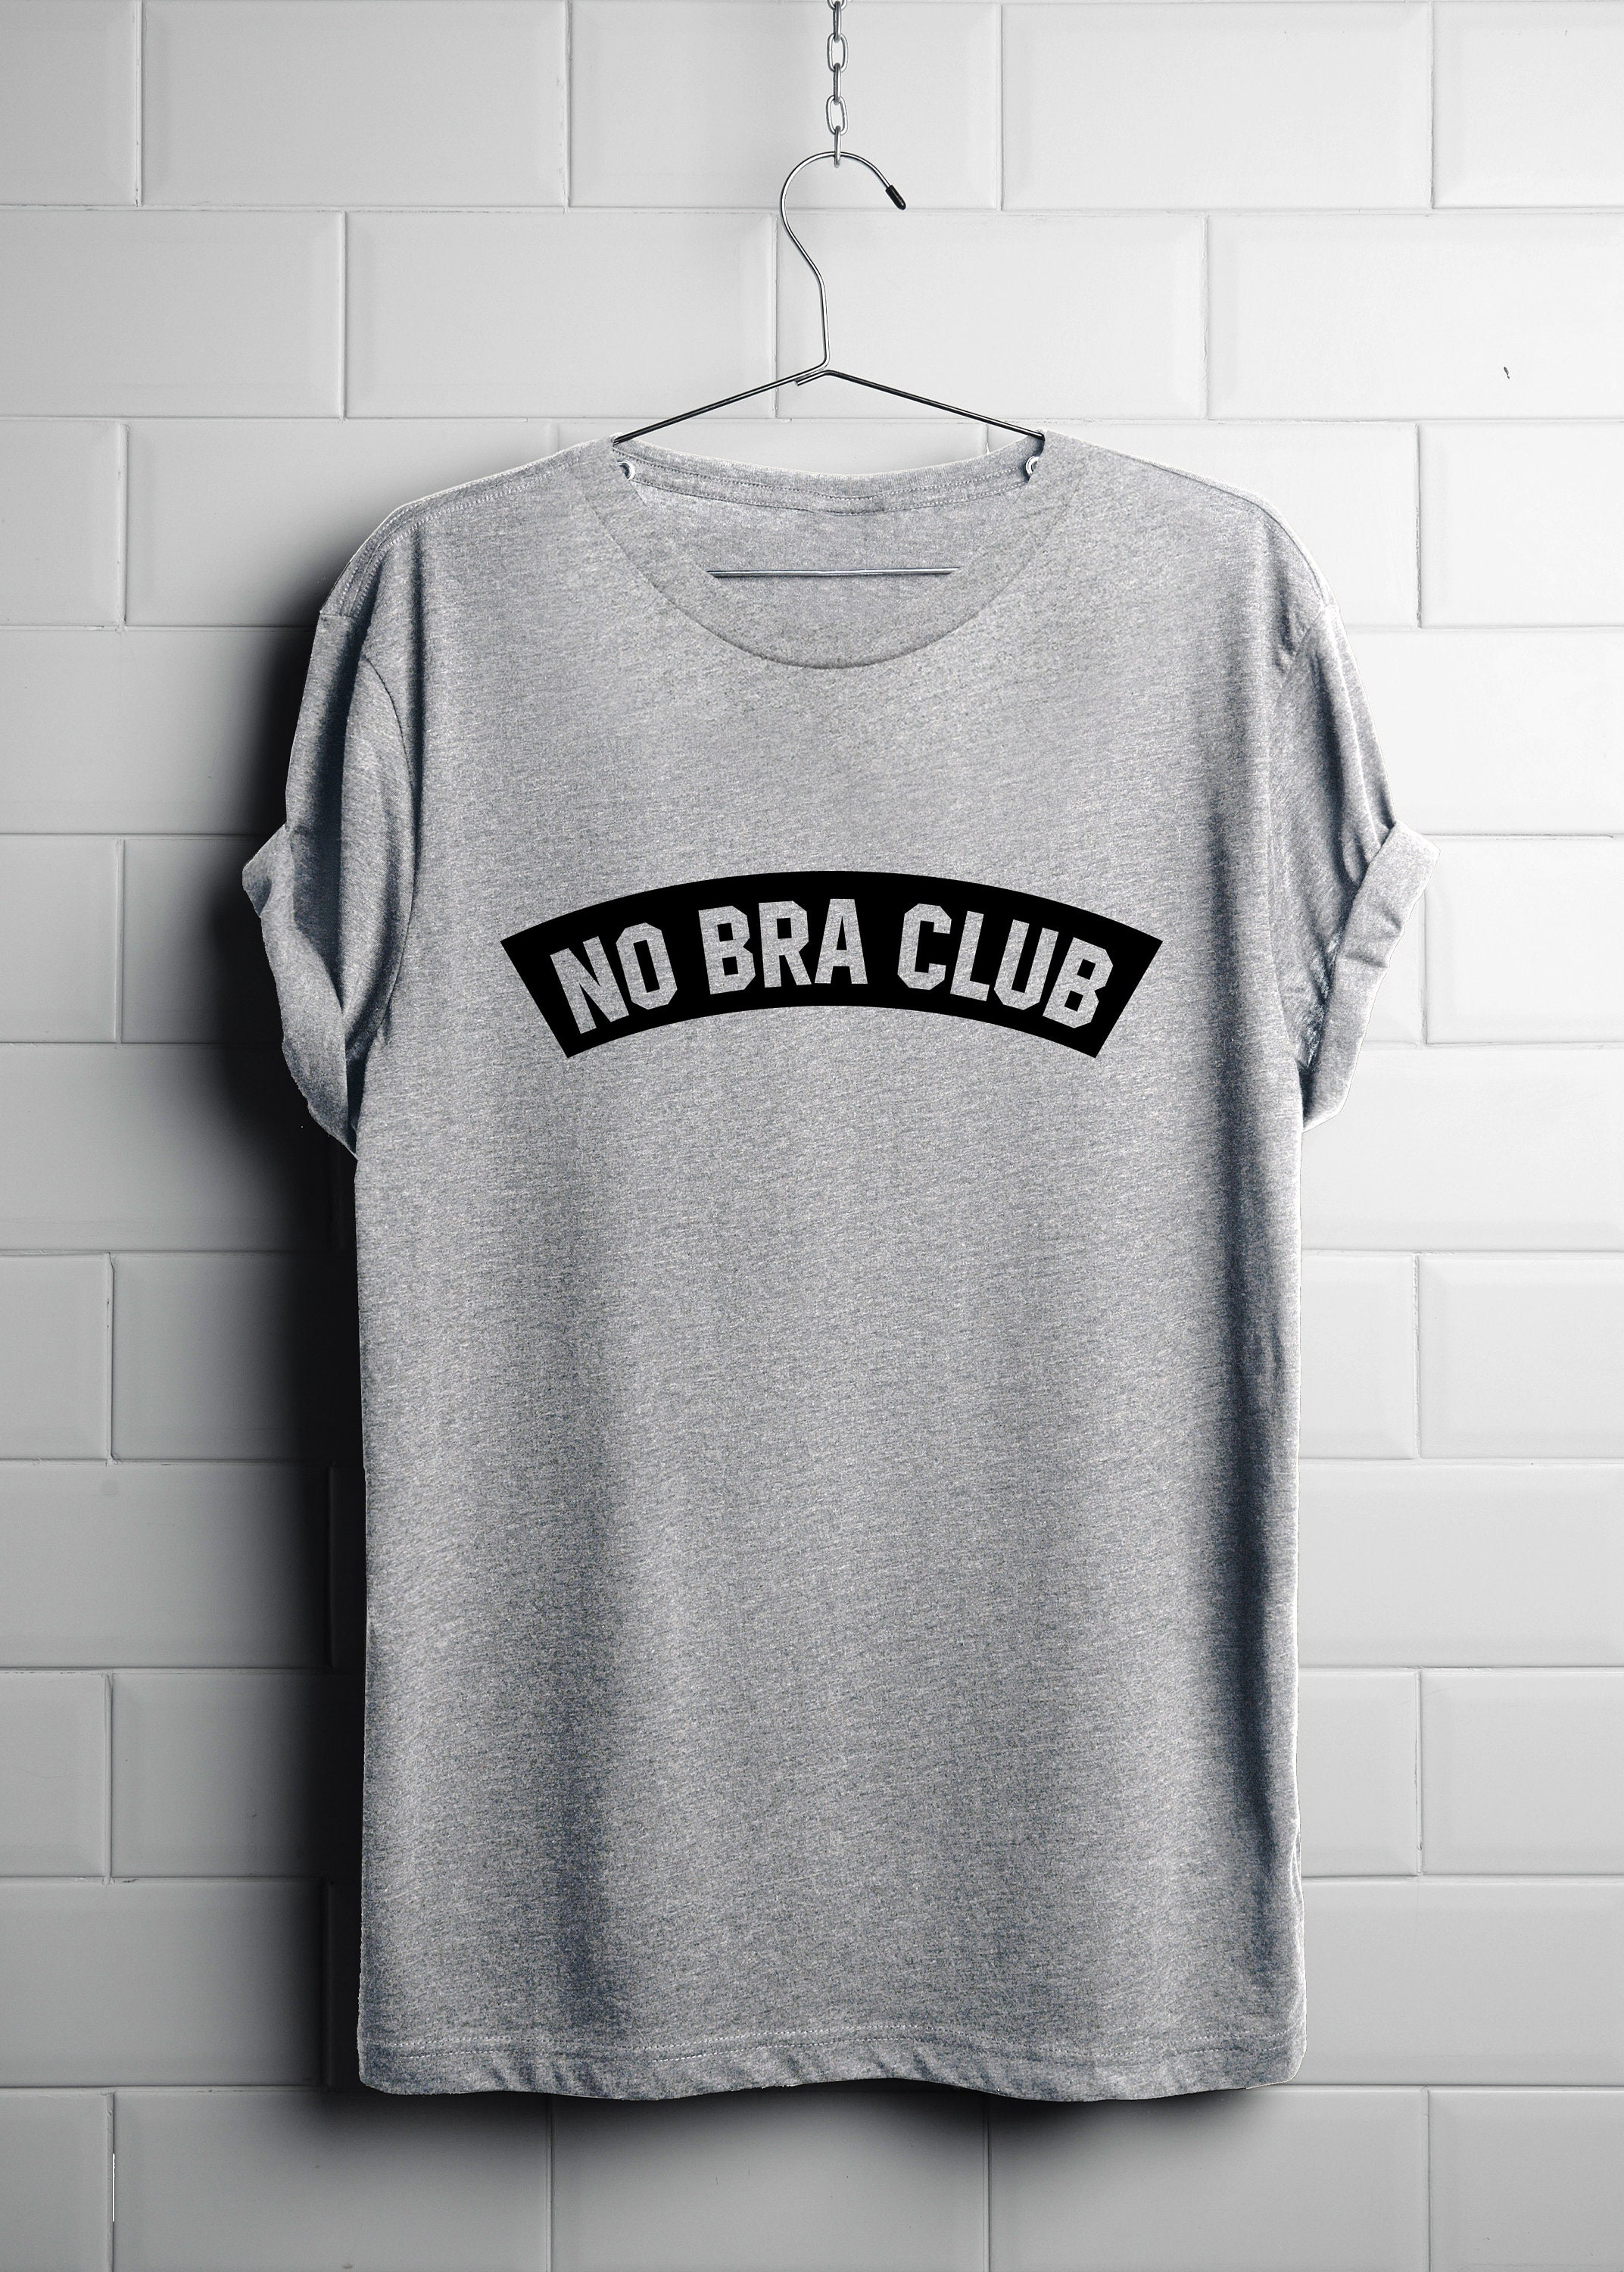 No Bra Club Shirt, Feminist, Women Shirt, No Bra Shirt, Top, Tee